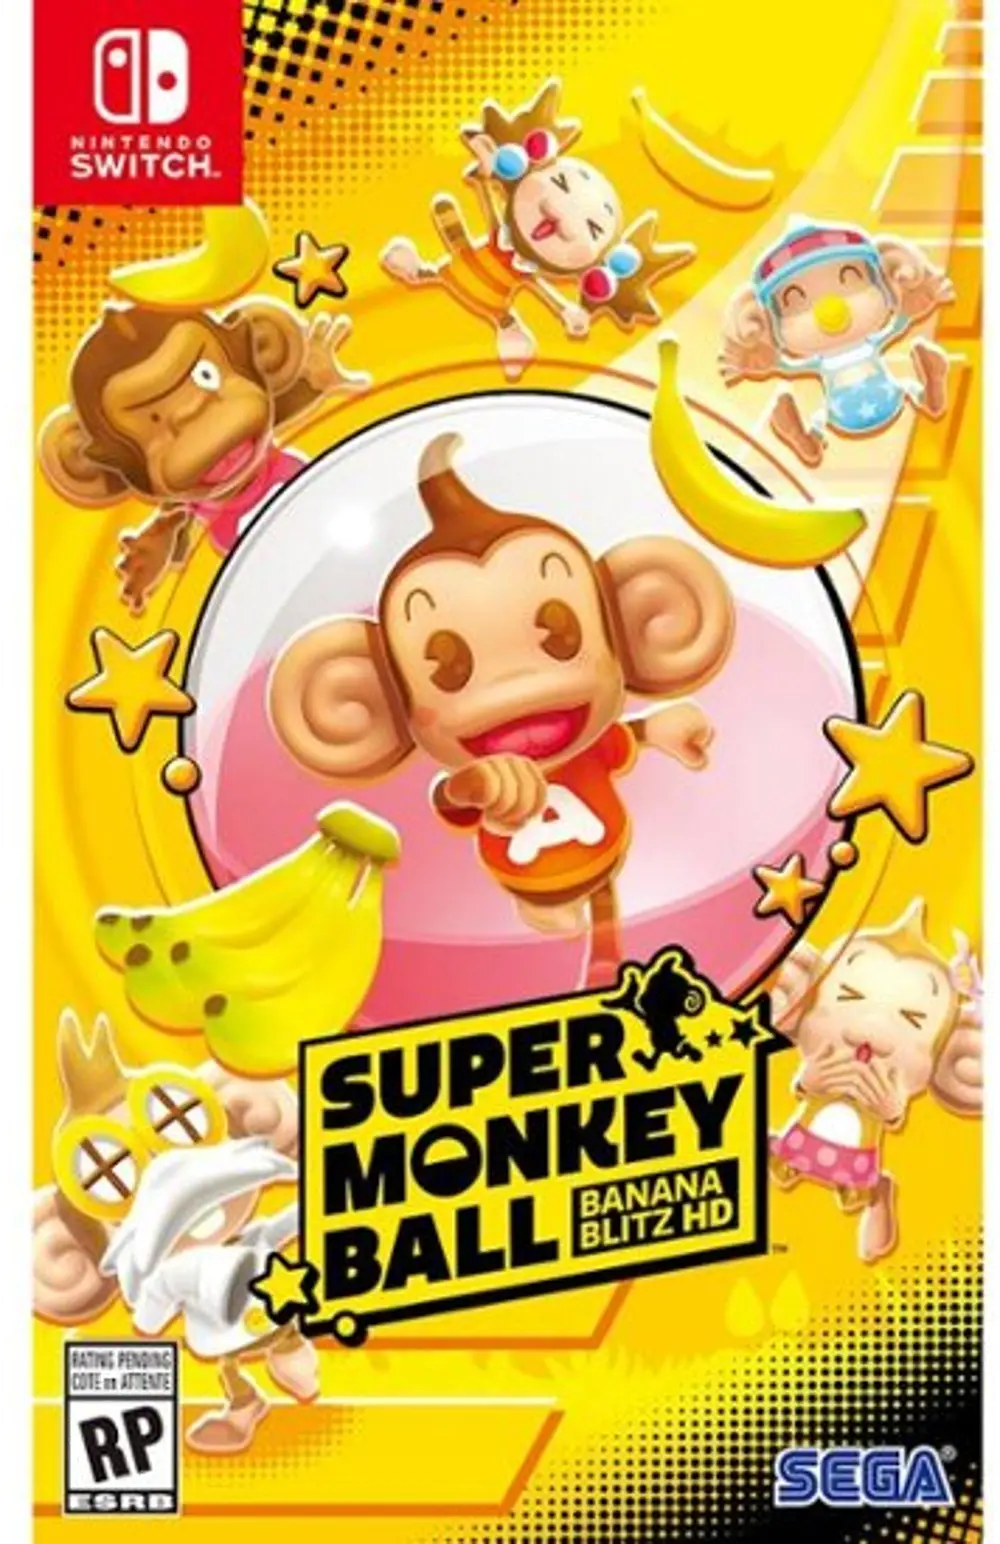 SWI SEG 77011 Super Monkey Ball: Banana Blitz HD - Nintendo Switch-1